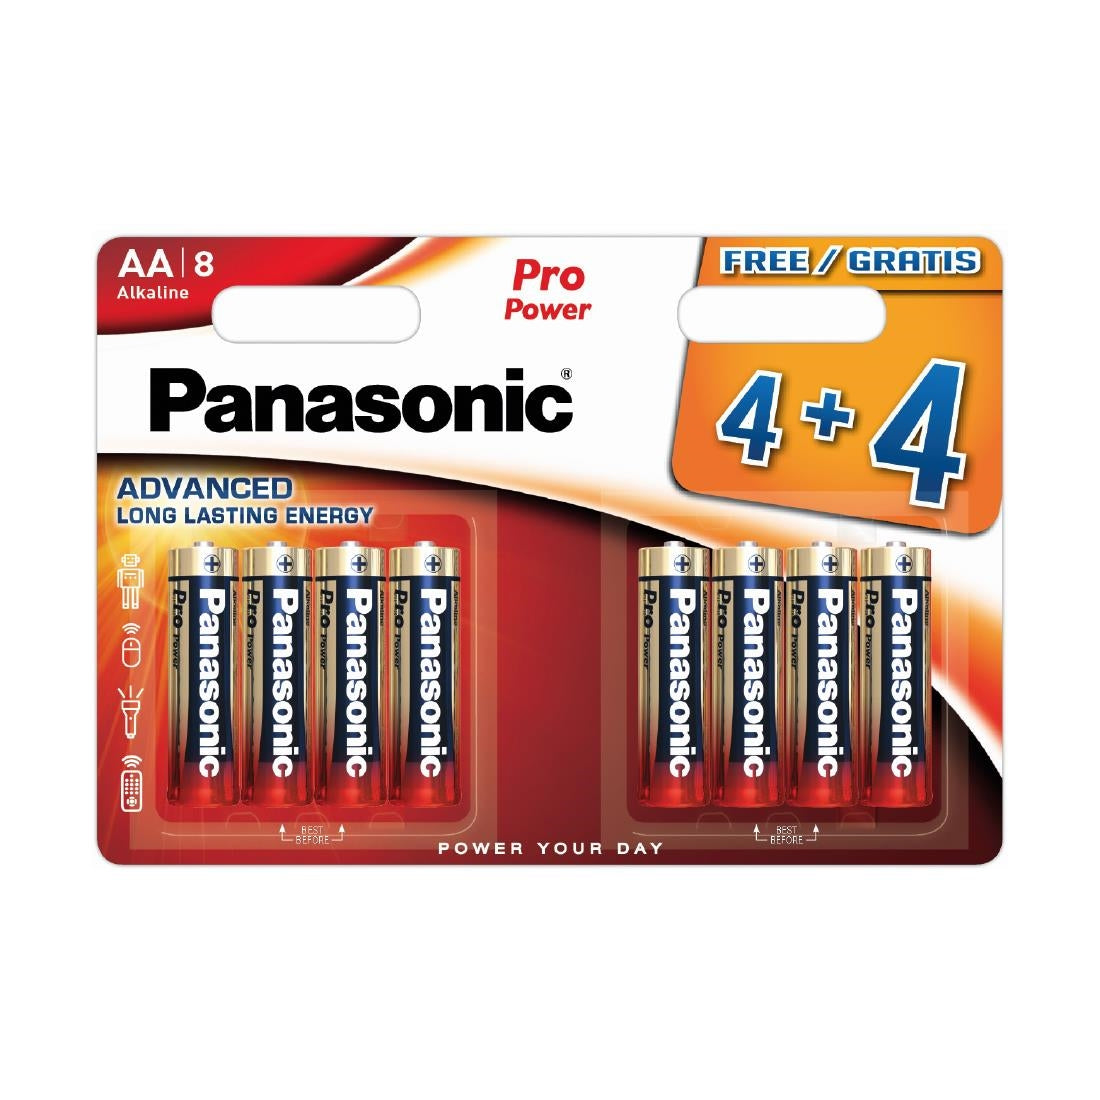 CU362 Panasonic Pro Power Batteries AA 4+4 Free Promo Pack JD Catering Equipment Solutions Ltd